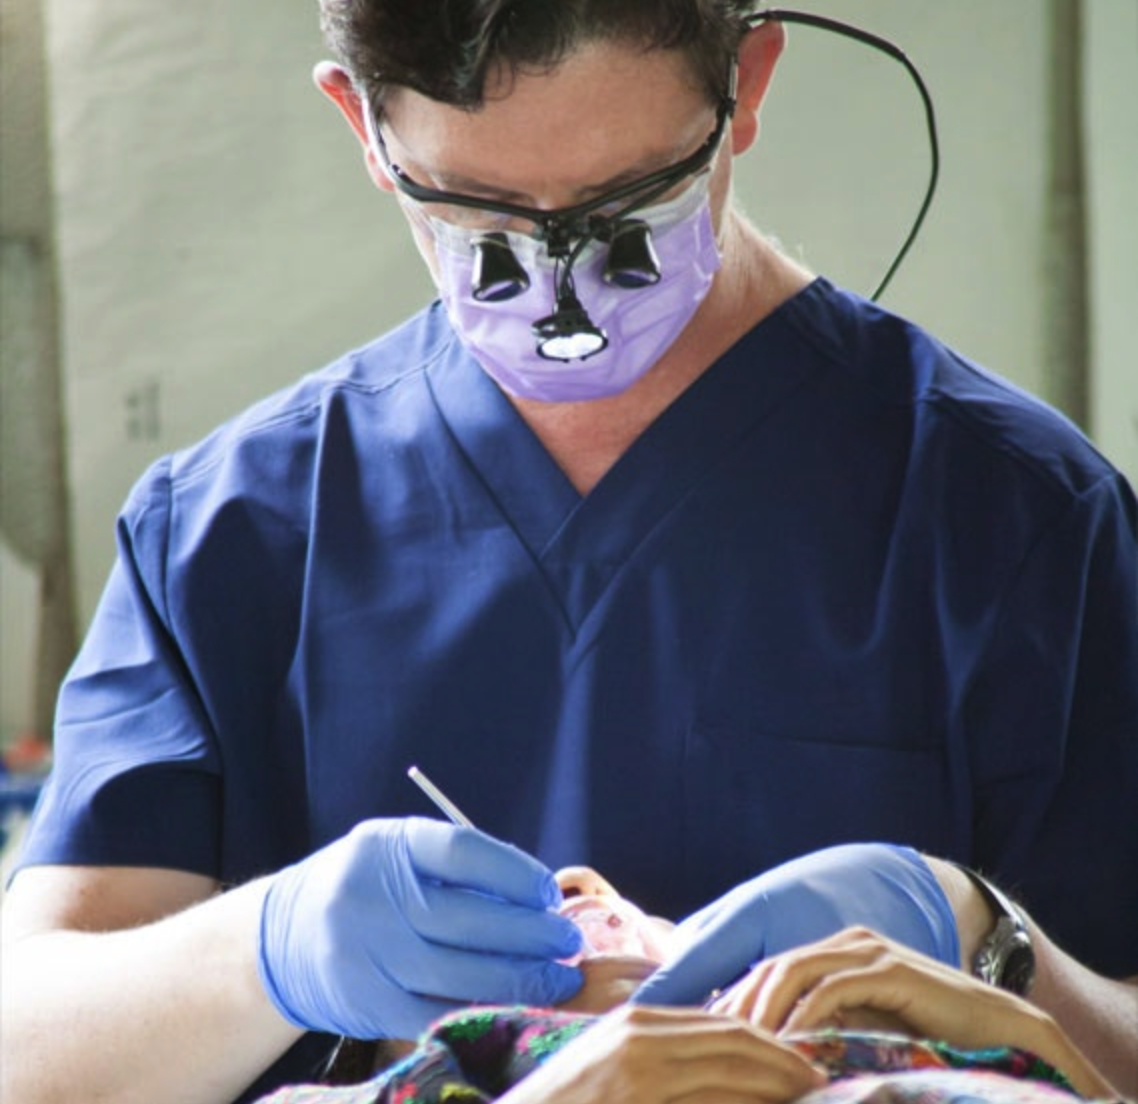 Dentist at work | Parkway Dental: Michael D Haight, DDS | Albuquerque, NM